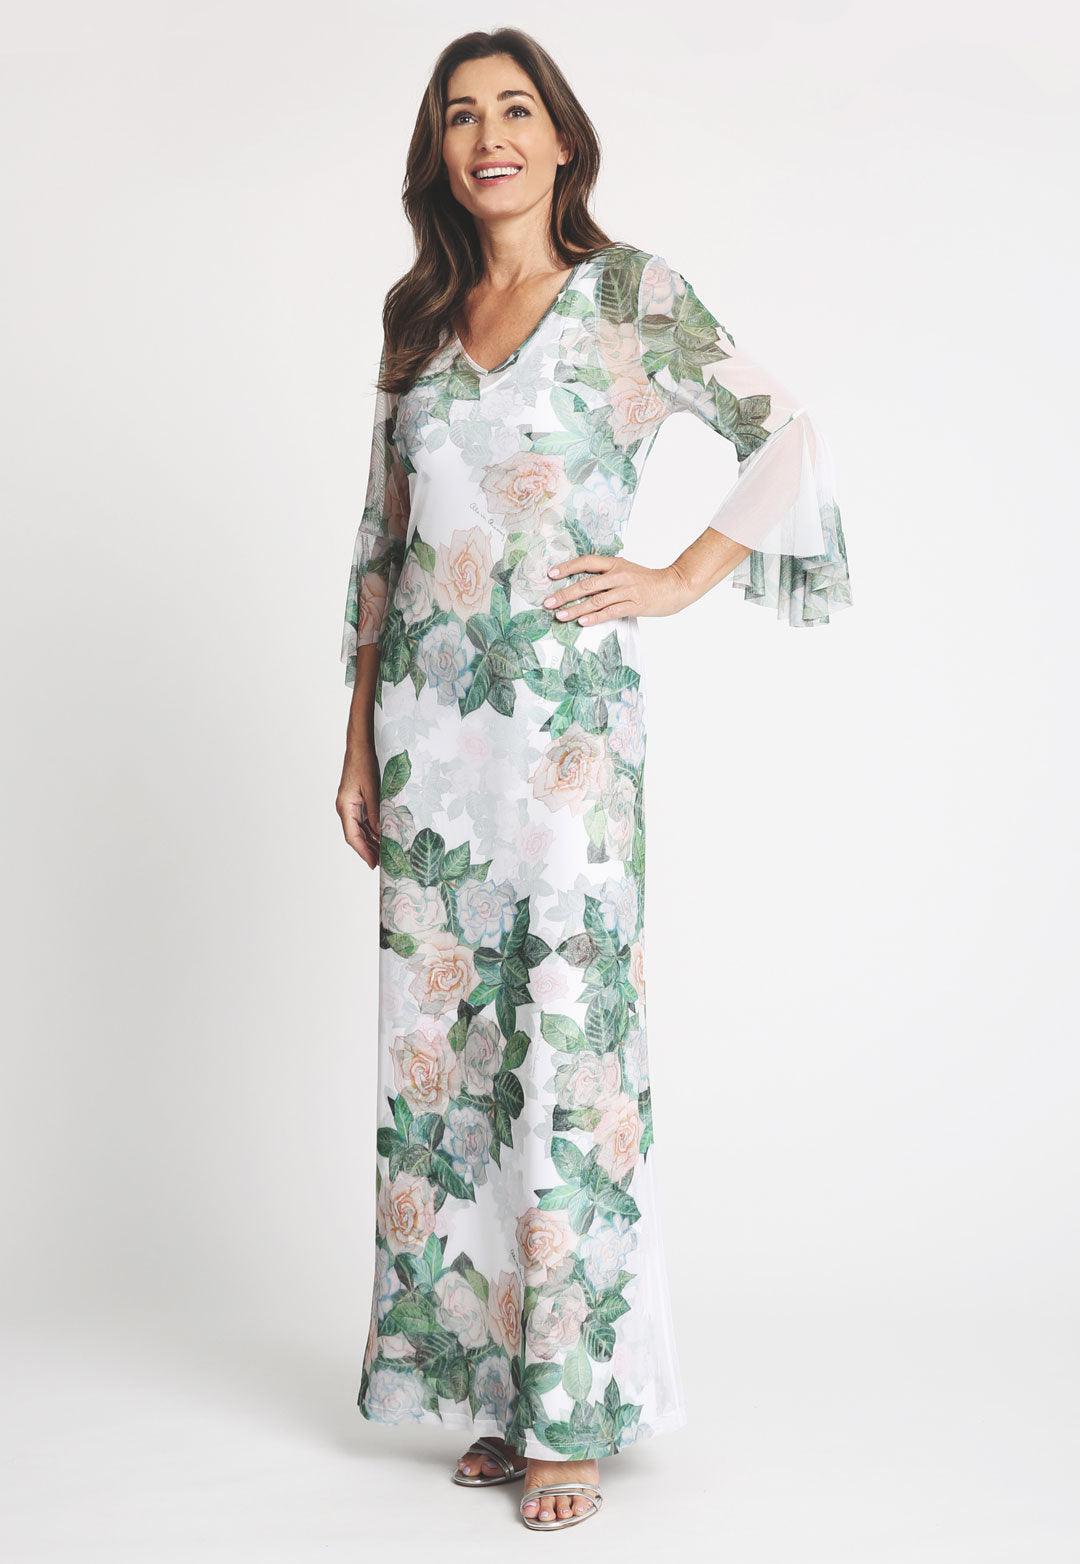 Model wearing mesh long three quartered sleeve gardenia flower printed dress over a long gardenia flower printed stretch knit dress